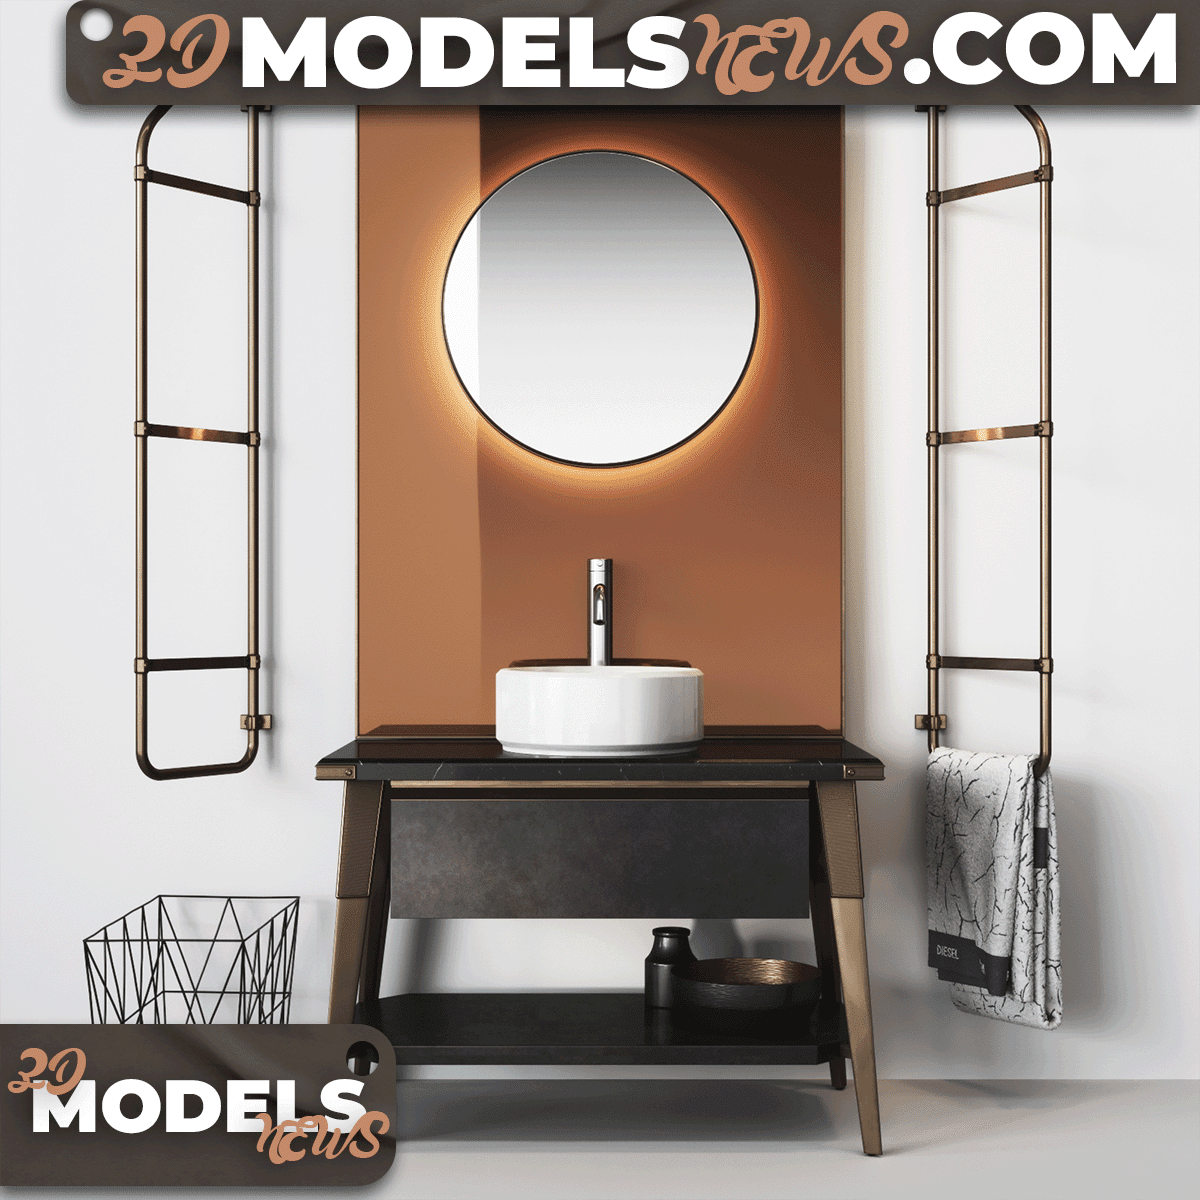 Bathroom Furniture Model Diesel Scavolini Wash Basin 1